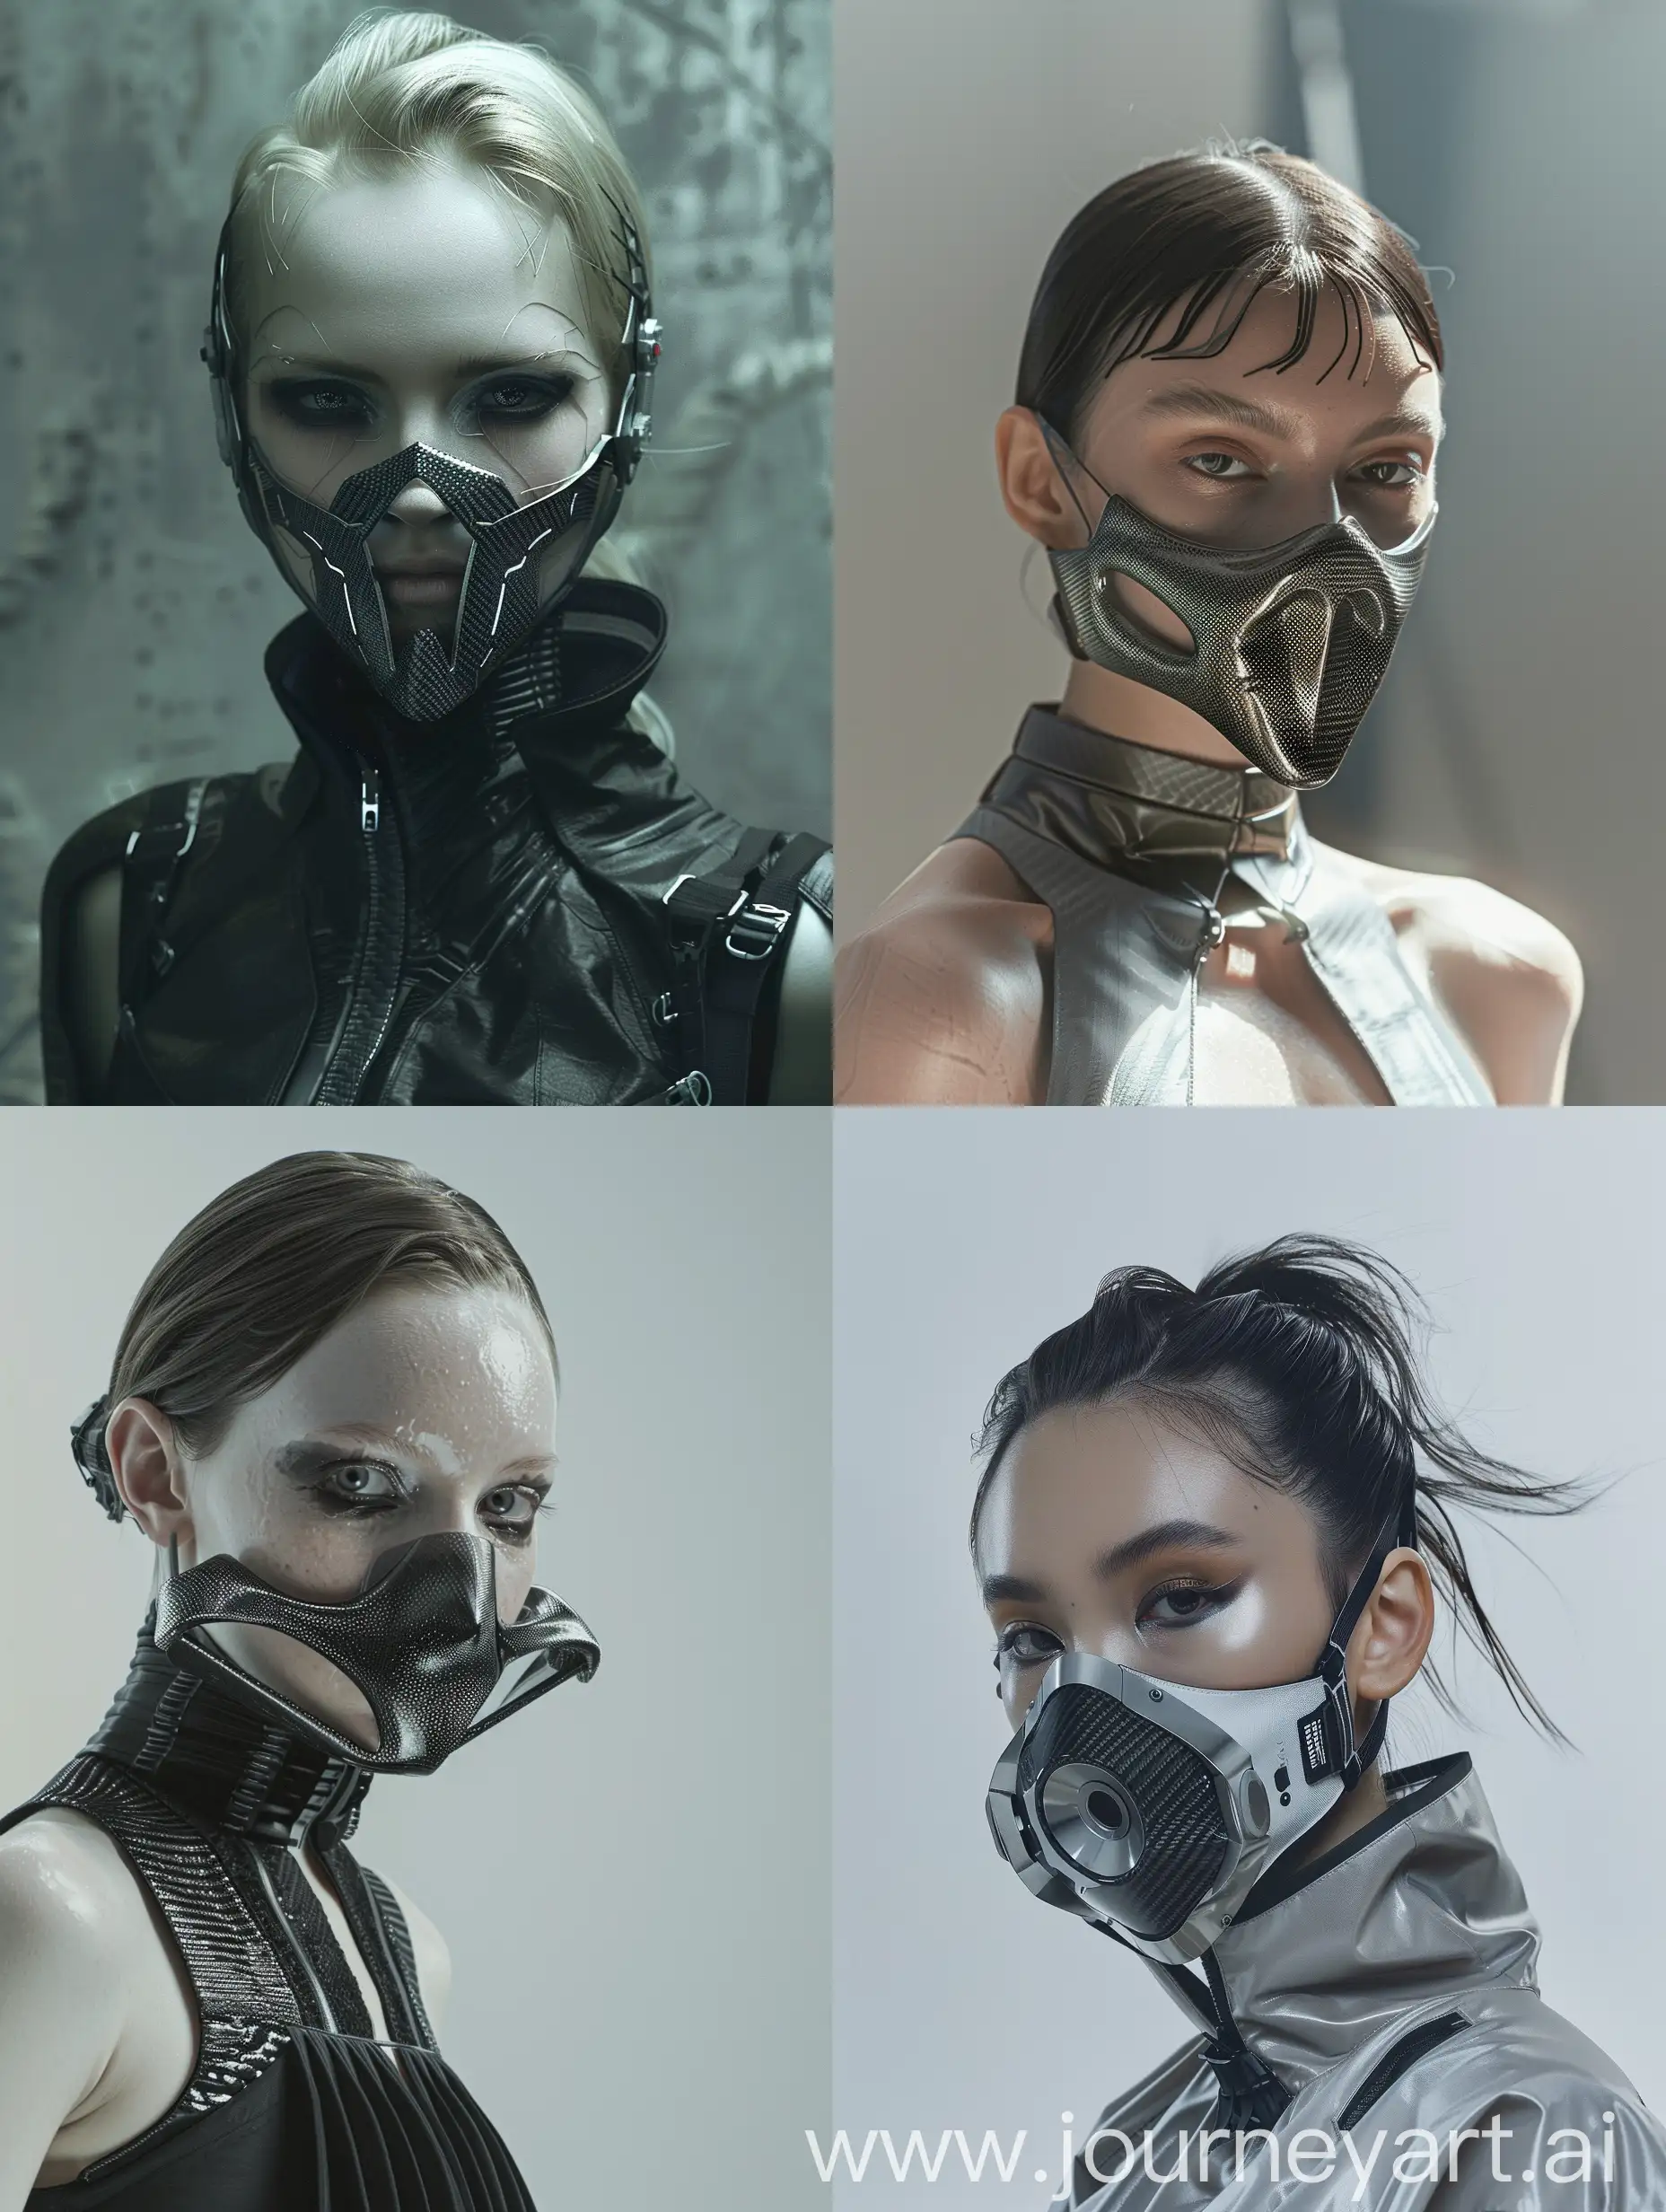 Futuristic-Aesthetic-Cybernetic-Mask-and-Dynamic-Model-in-a-Cyberpunk-World